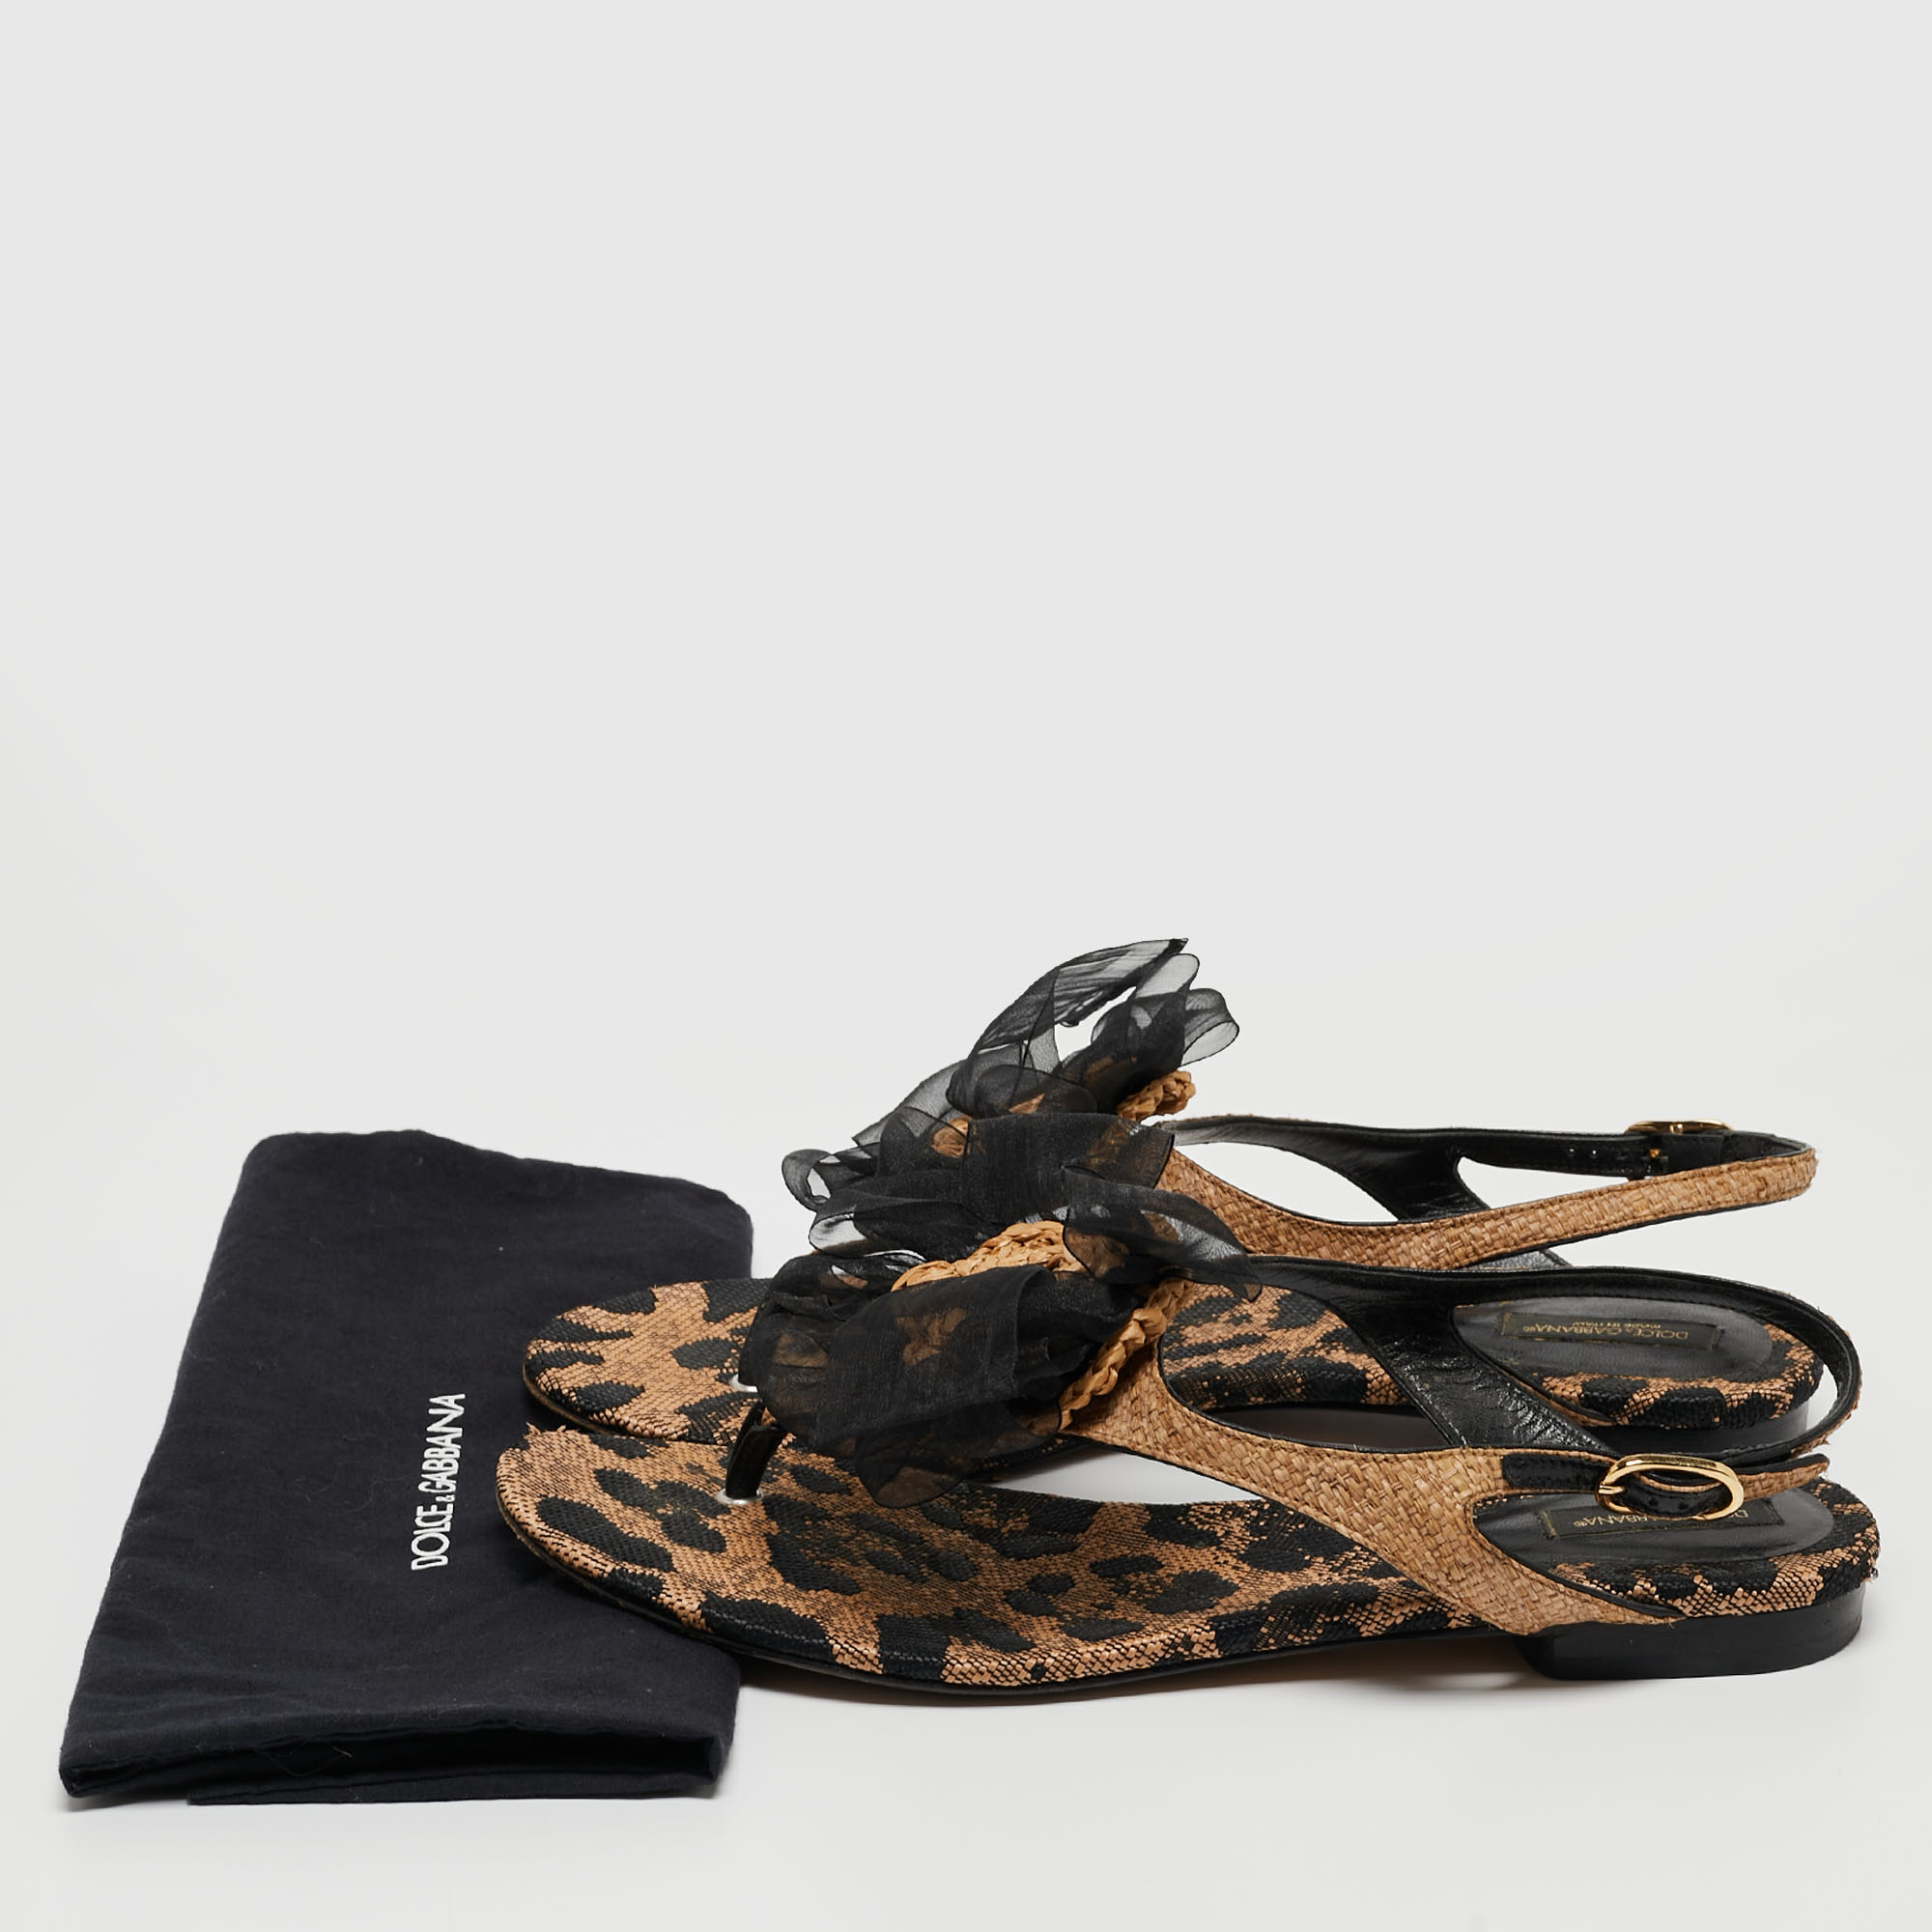 Dolce & Gabbana Beige/Black Raffia Floral Applique Thong Flat Sandals Size 40